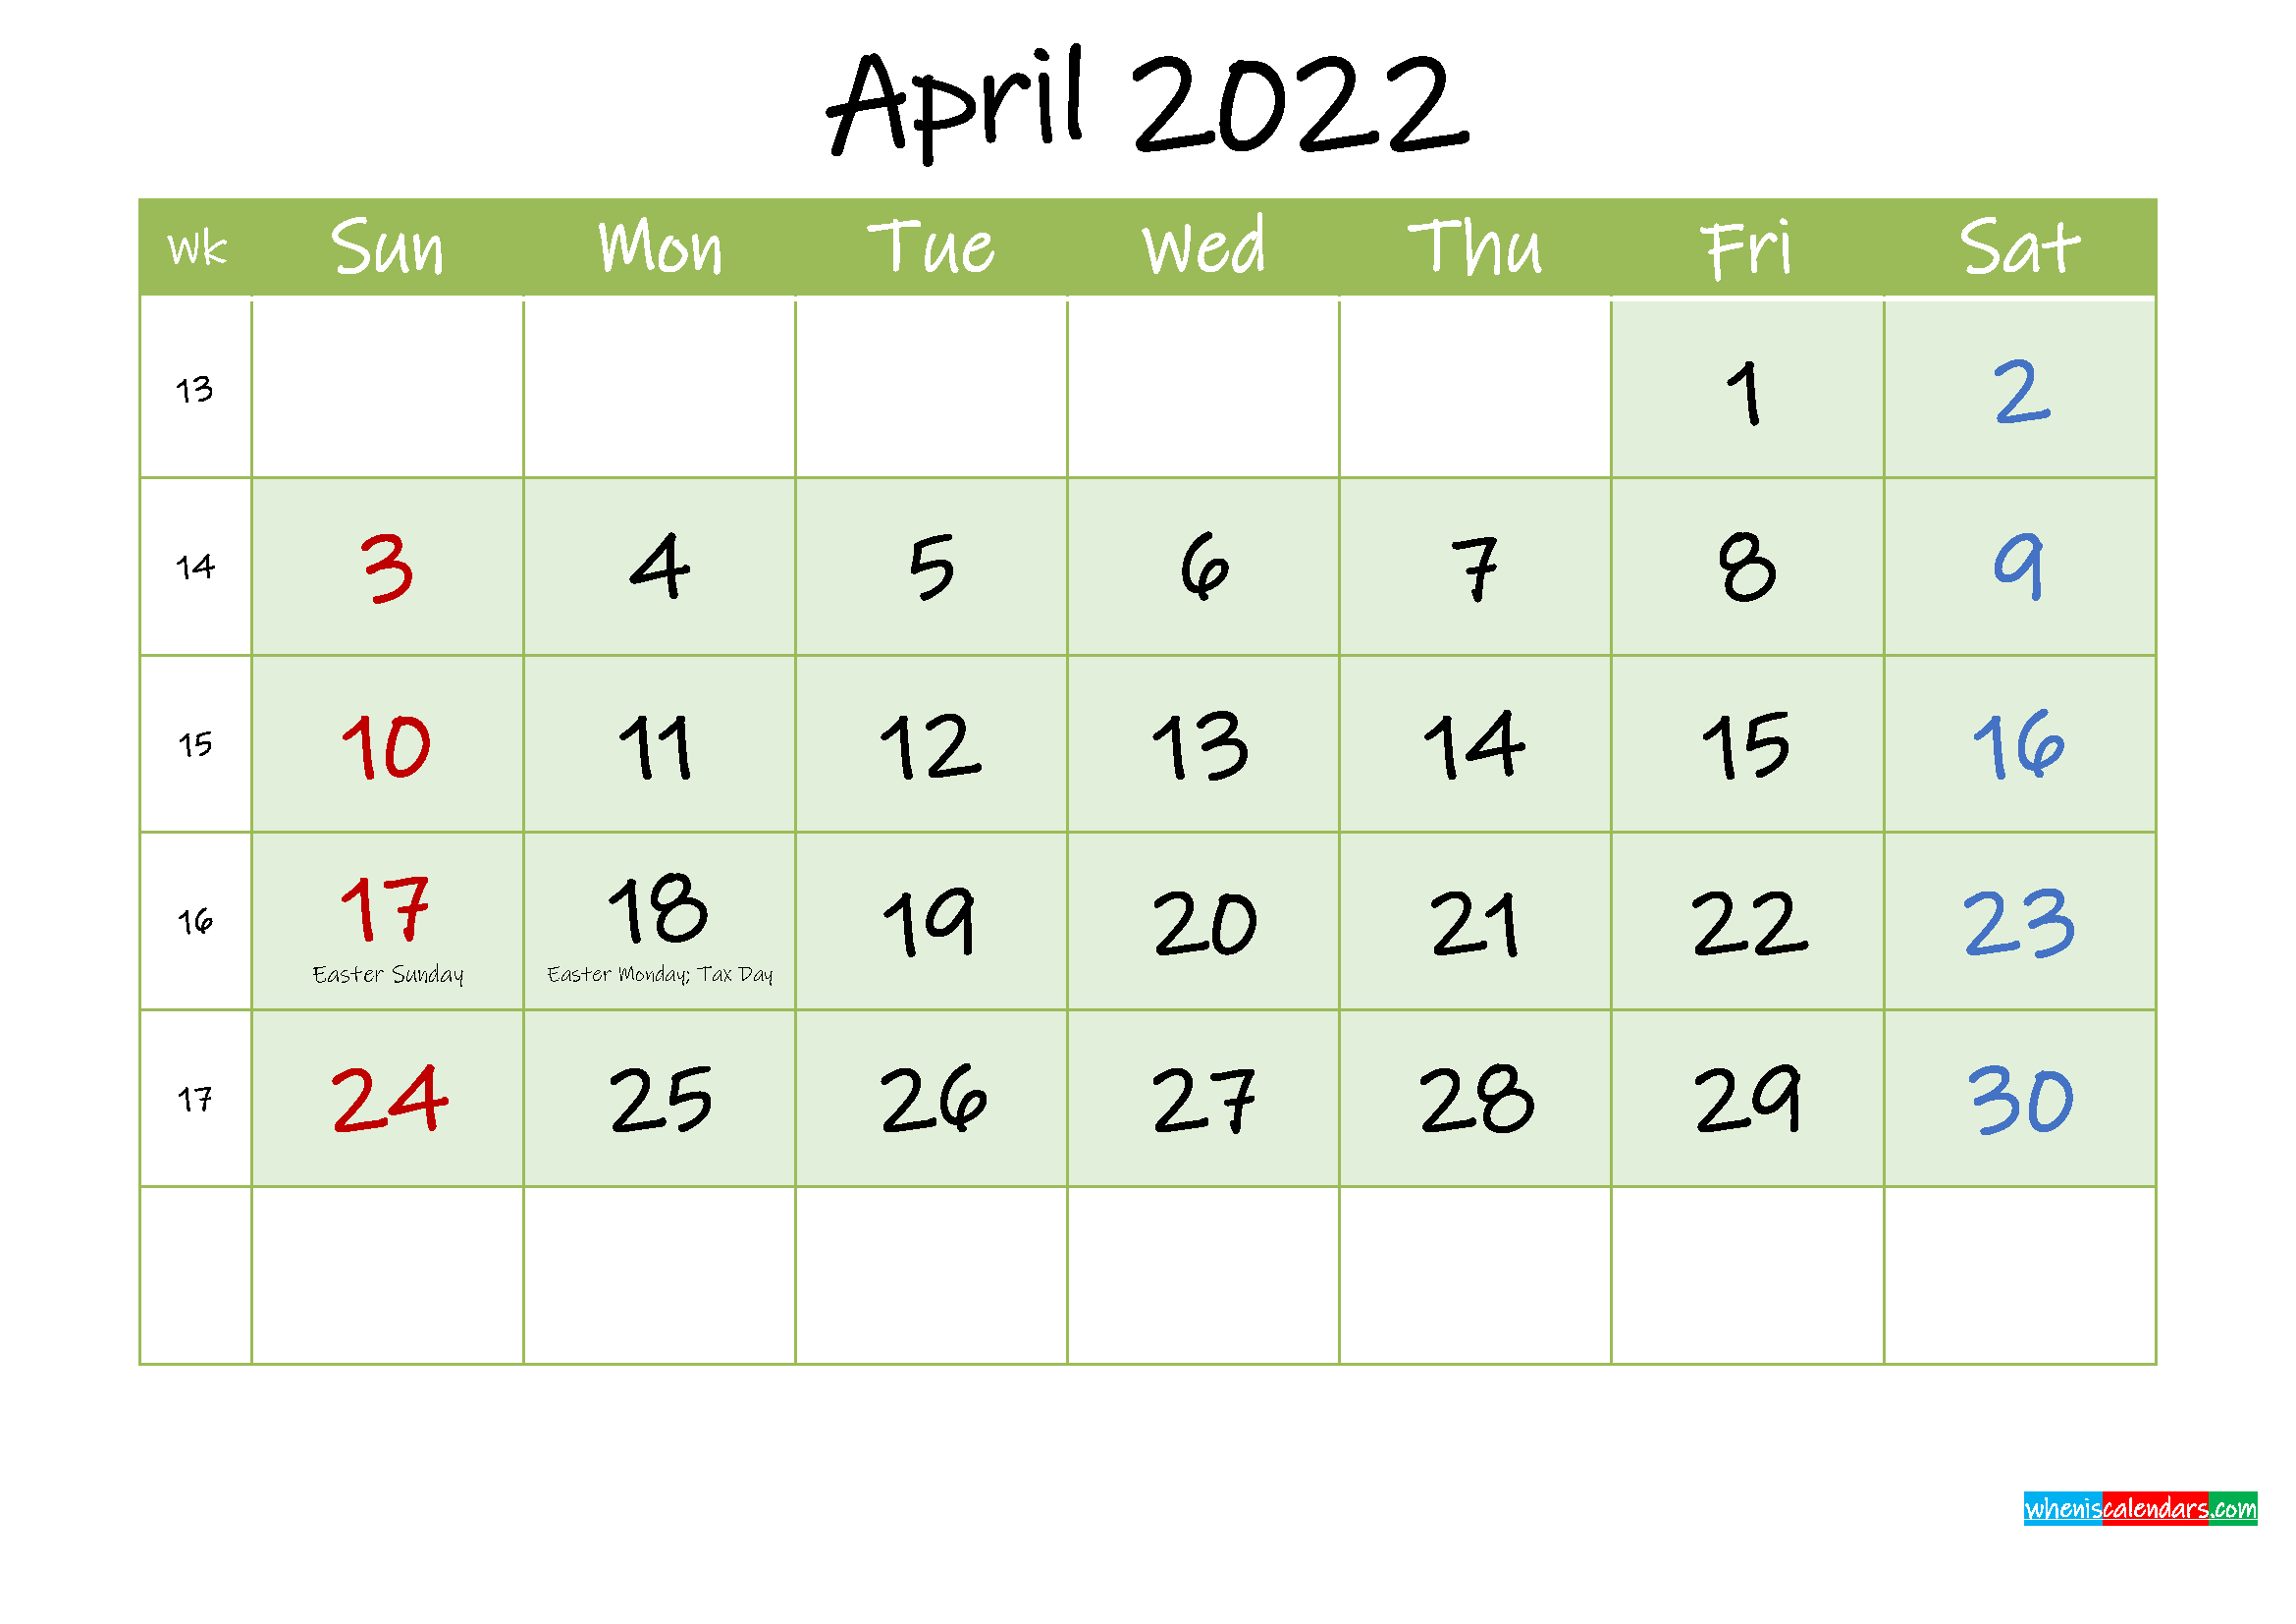 April 2022 Free Printable Calendar - Template Ink22M124  April Free Printable Calendar 2022